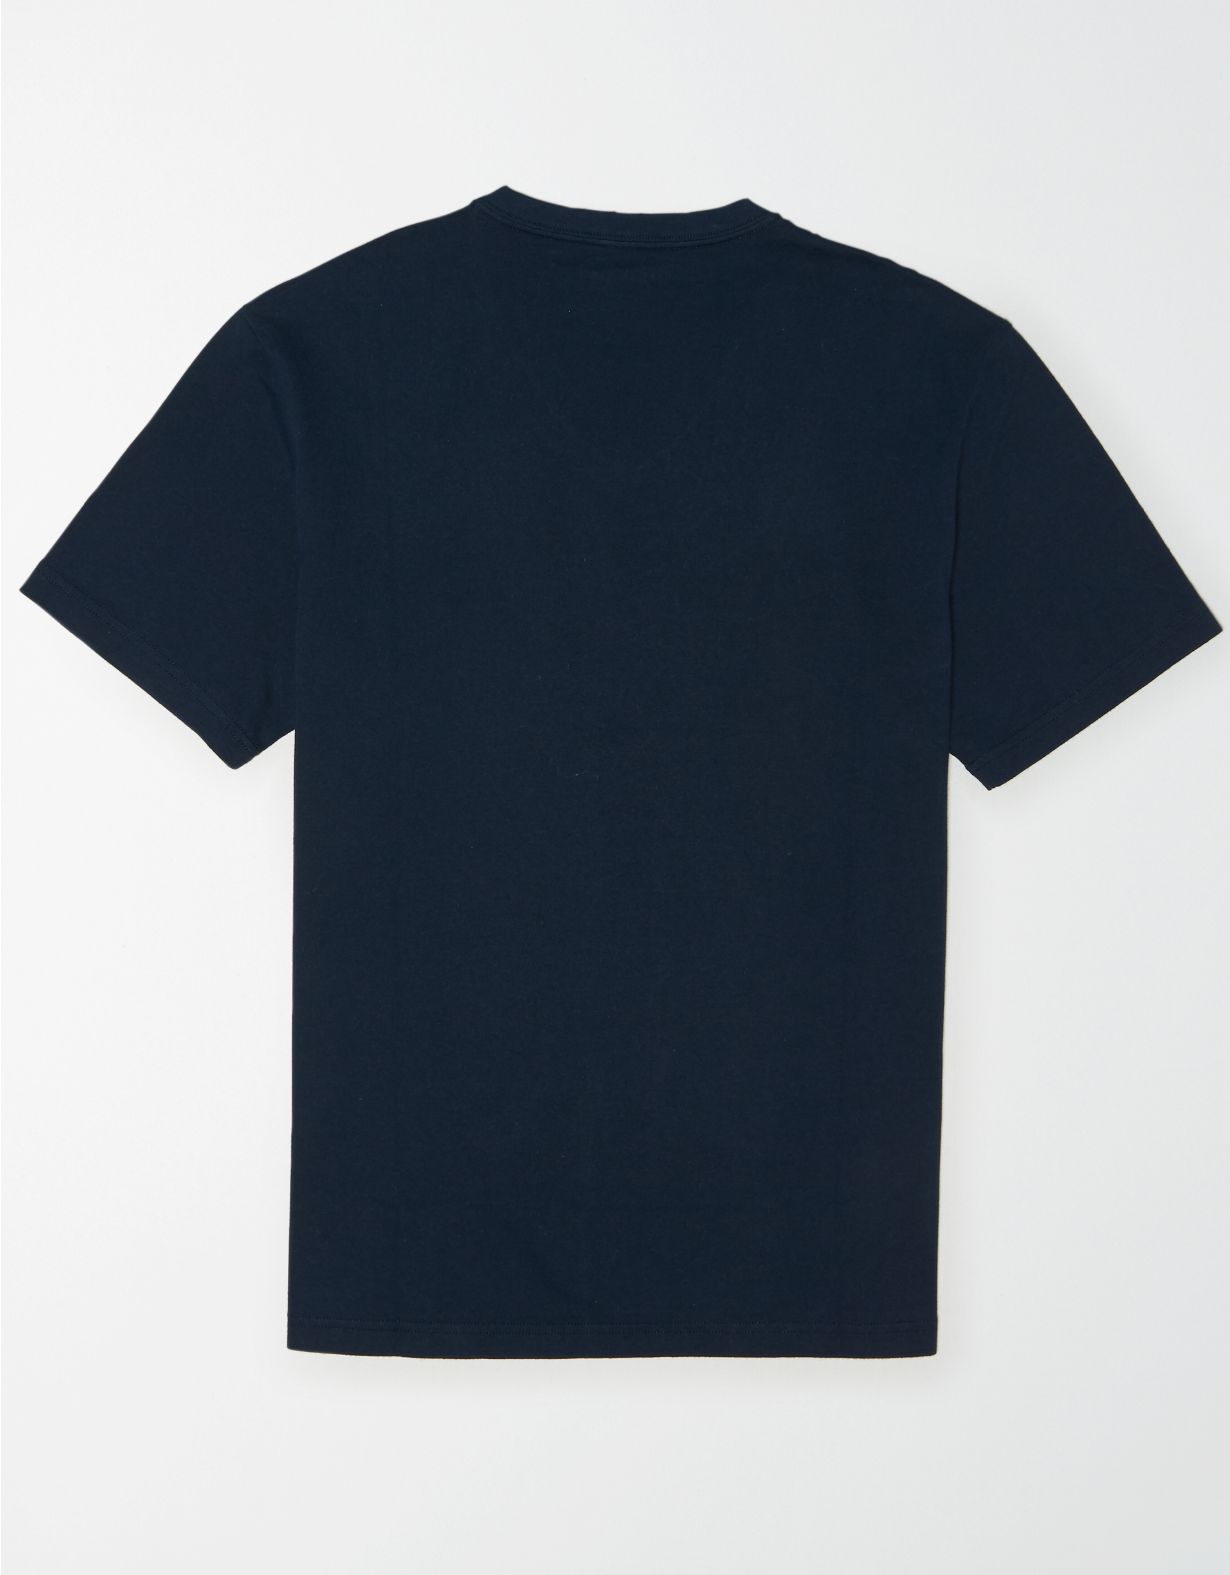 AE Super Soft Icon V-Neck T-Shirt